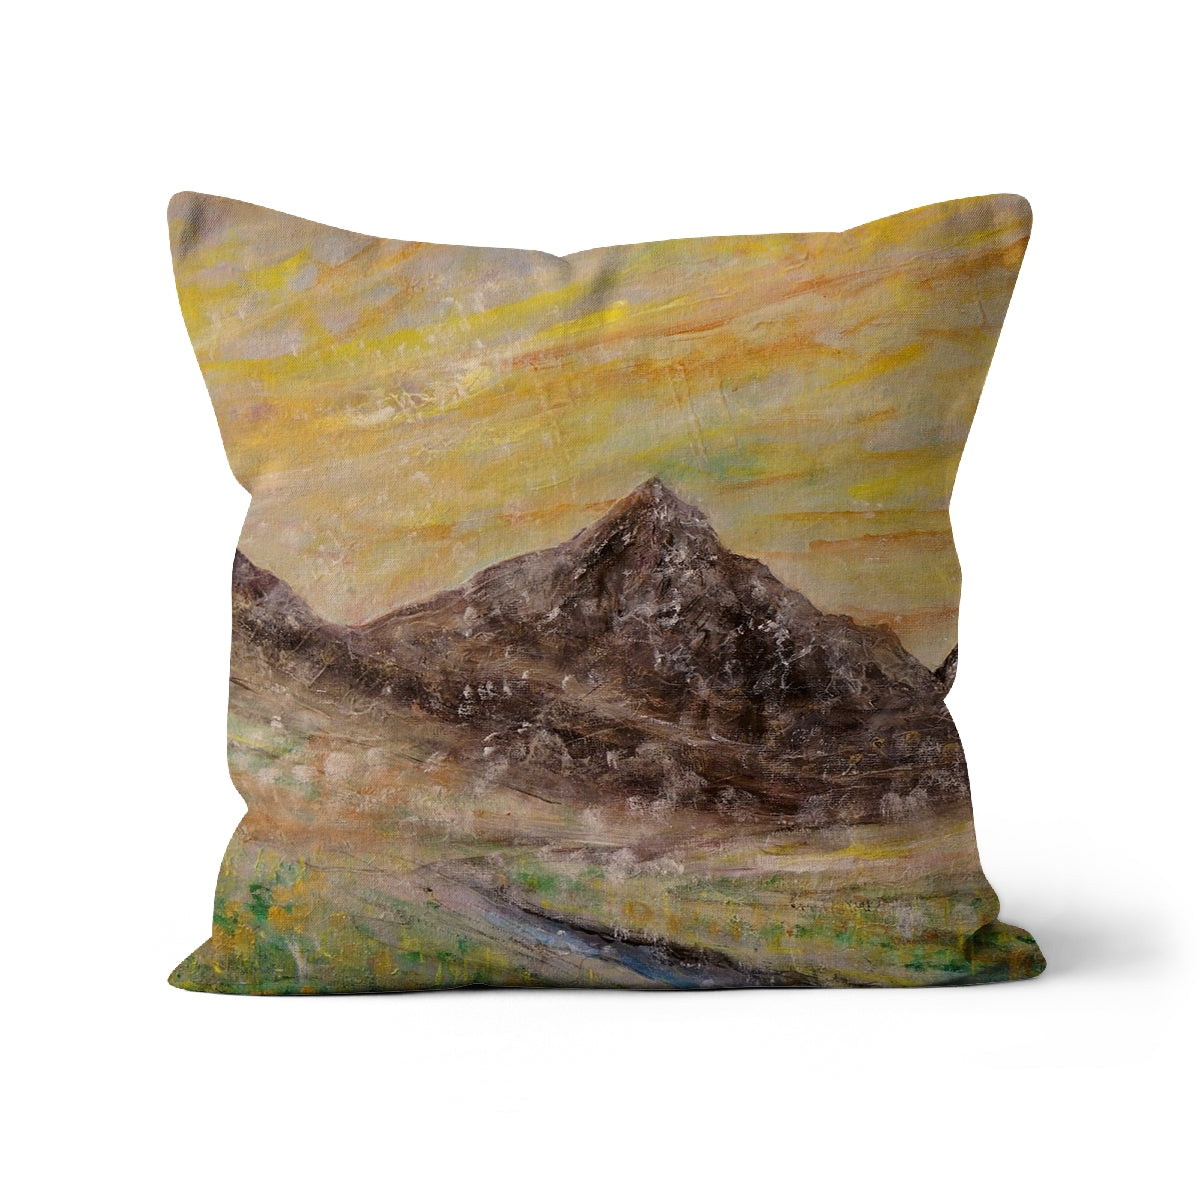 Glen Rosa Mist Arran Art Gifts Cushion-Cushions-Arran Art Gallery-Canvas-22"x22"-Paintings, Prints, Homeware, Art Gifts From Scotland By Scottish Artist Kevin Hunter